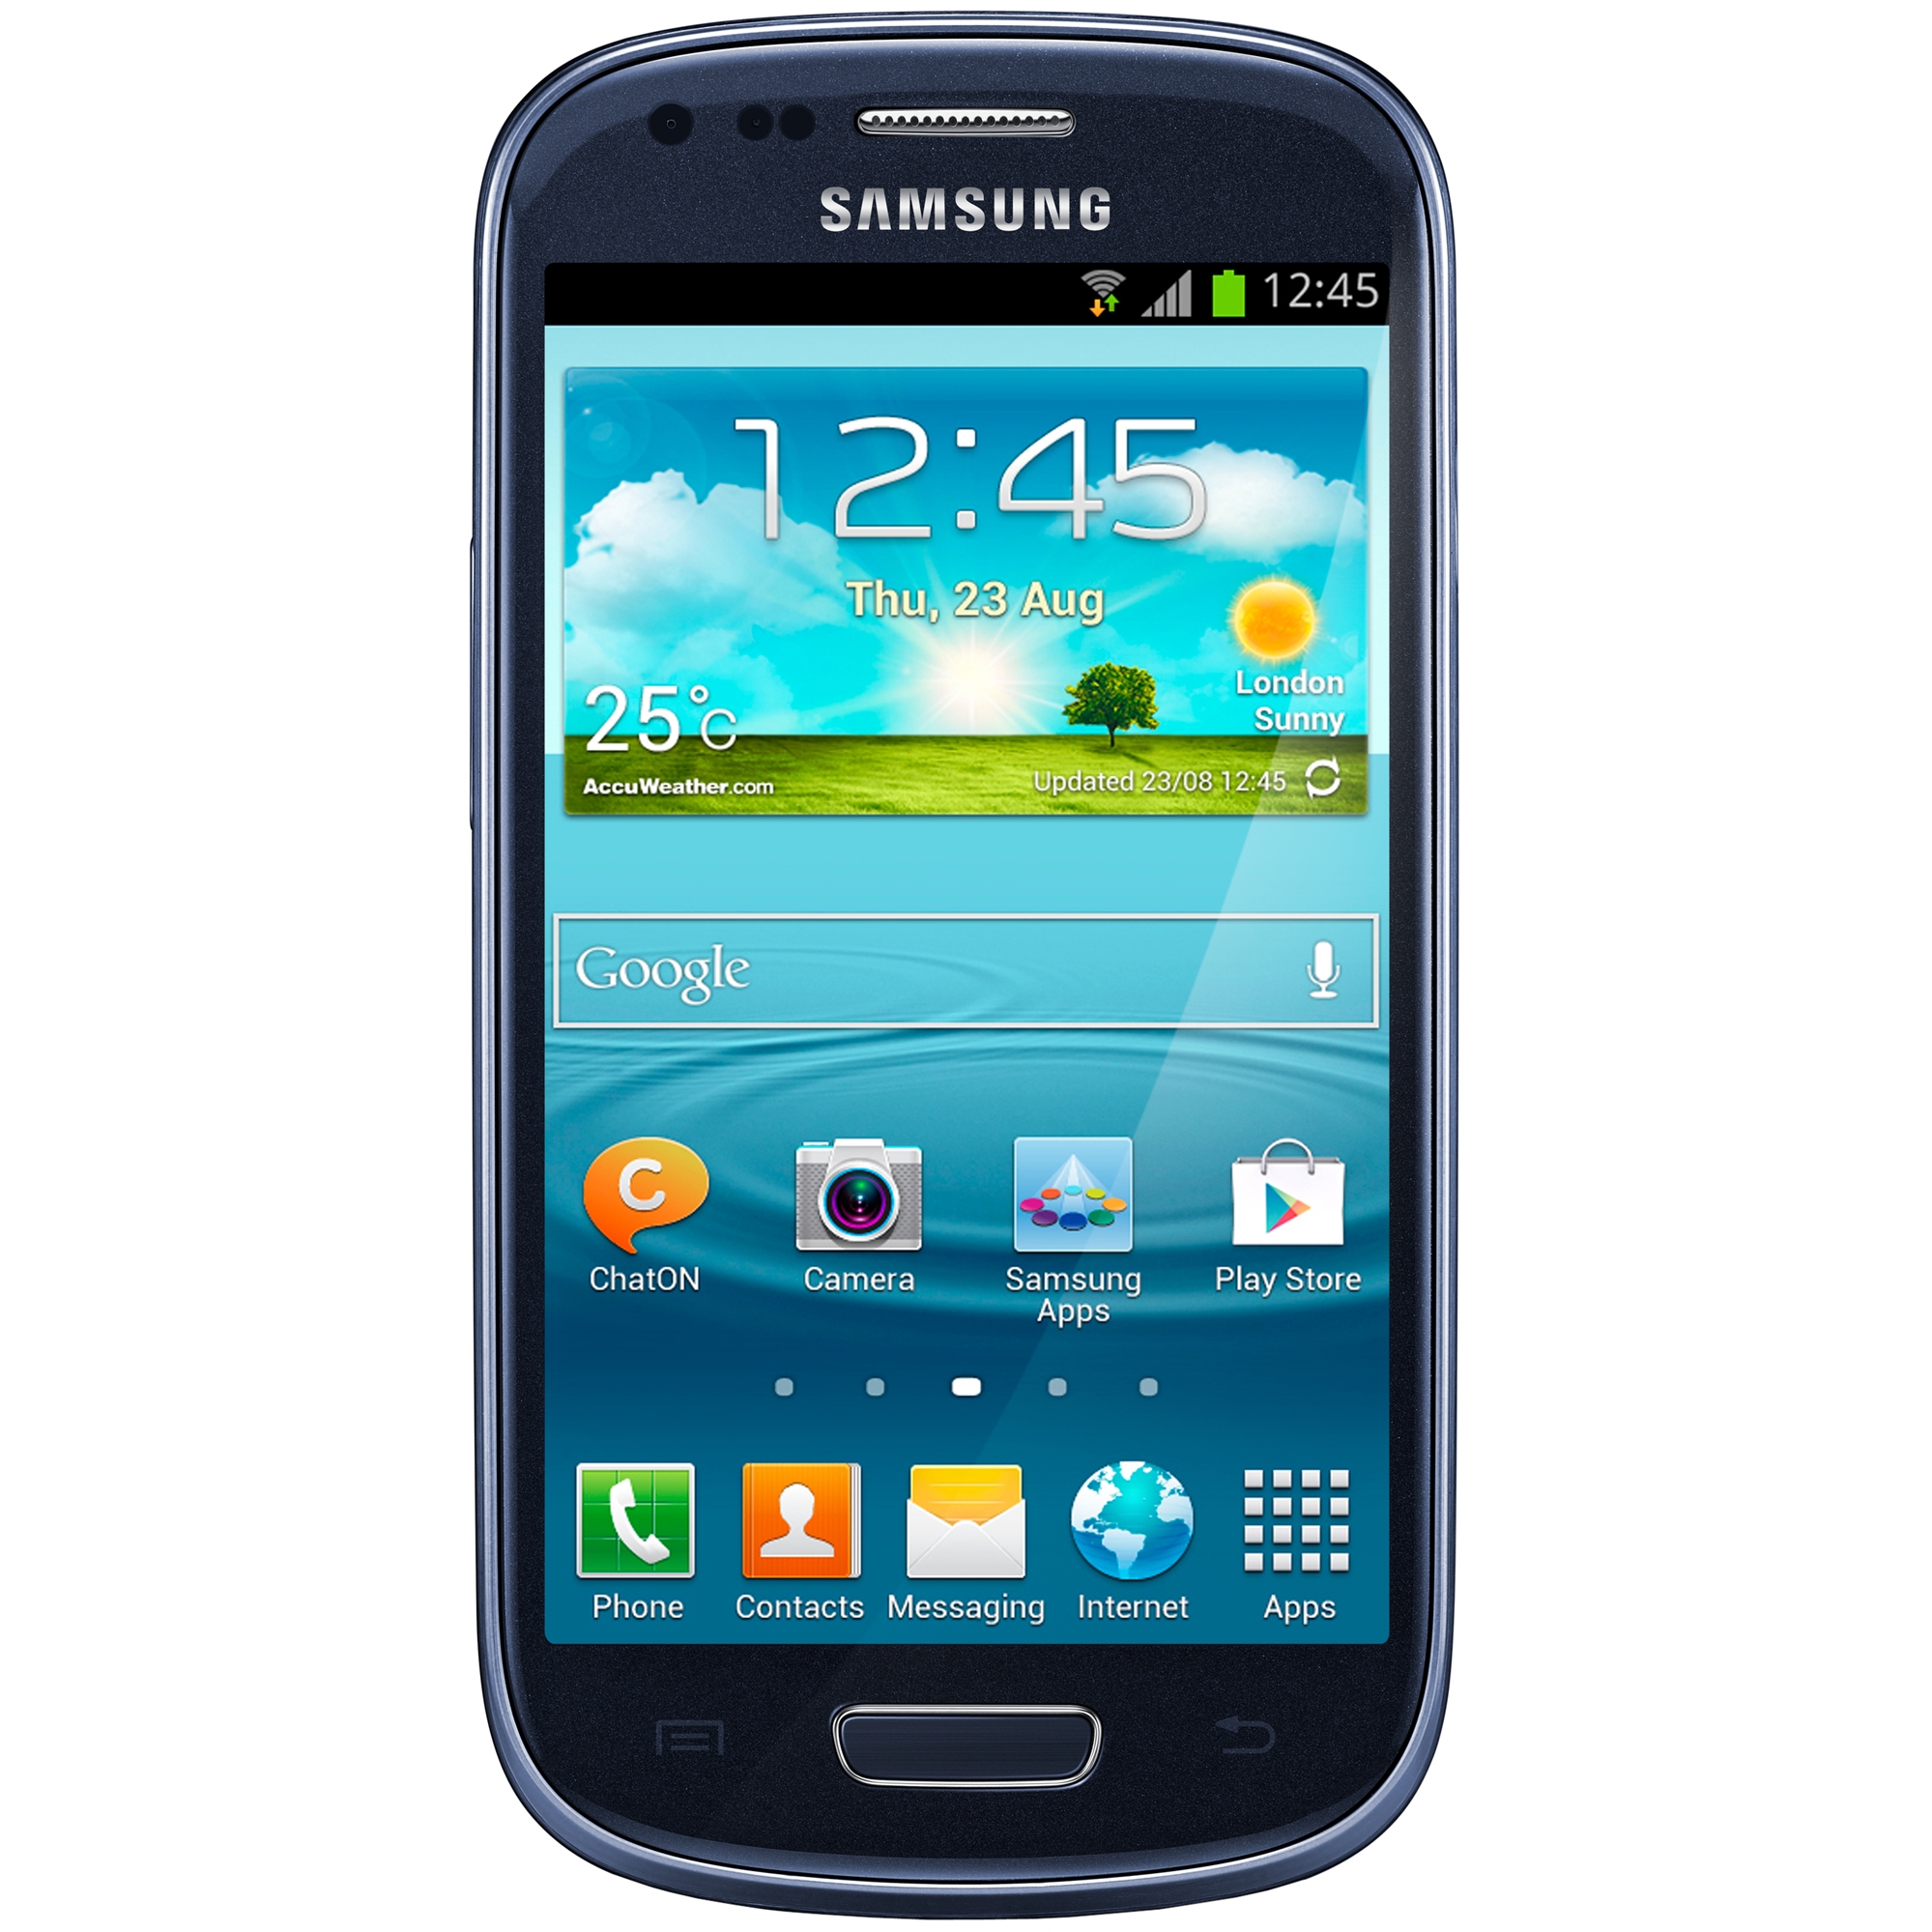 samsung galaxy s3 mini wallpaper,mobiltelefon,gadget,kommunikationsgerät,tragbares kommunikationsgerät,smartphone